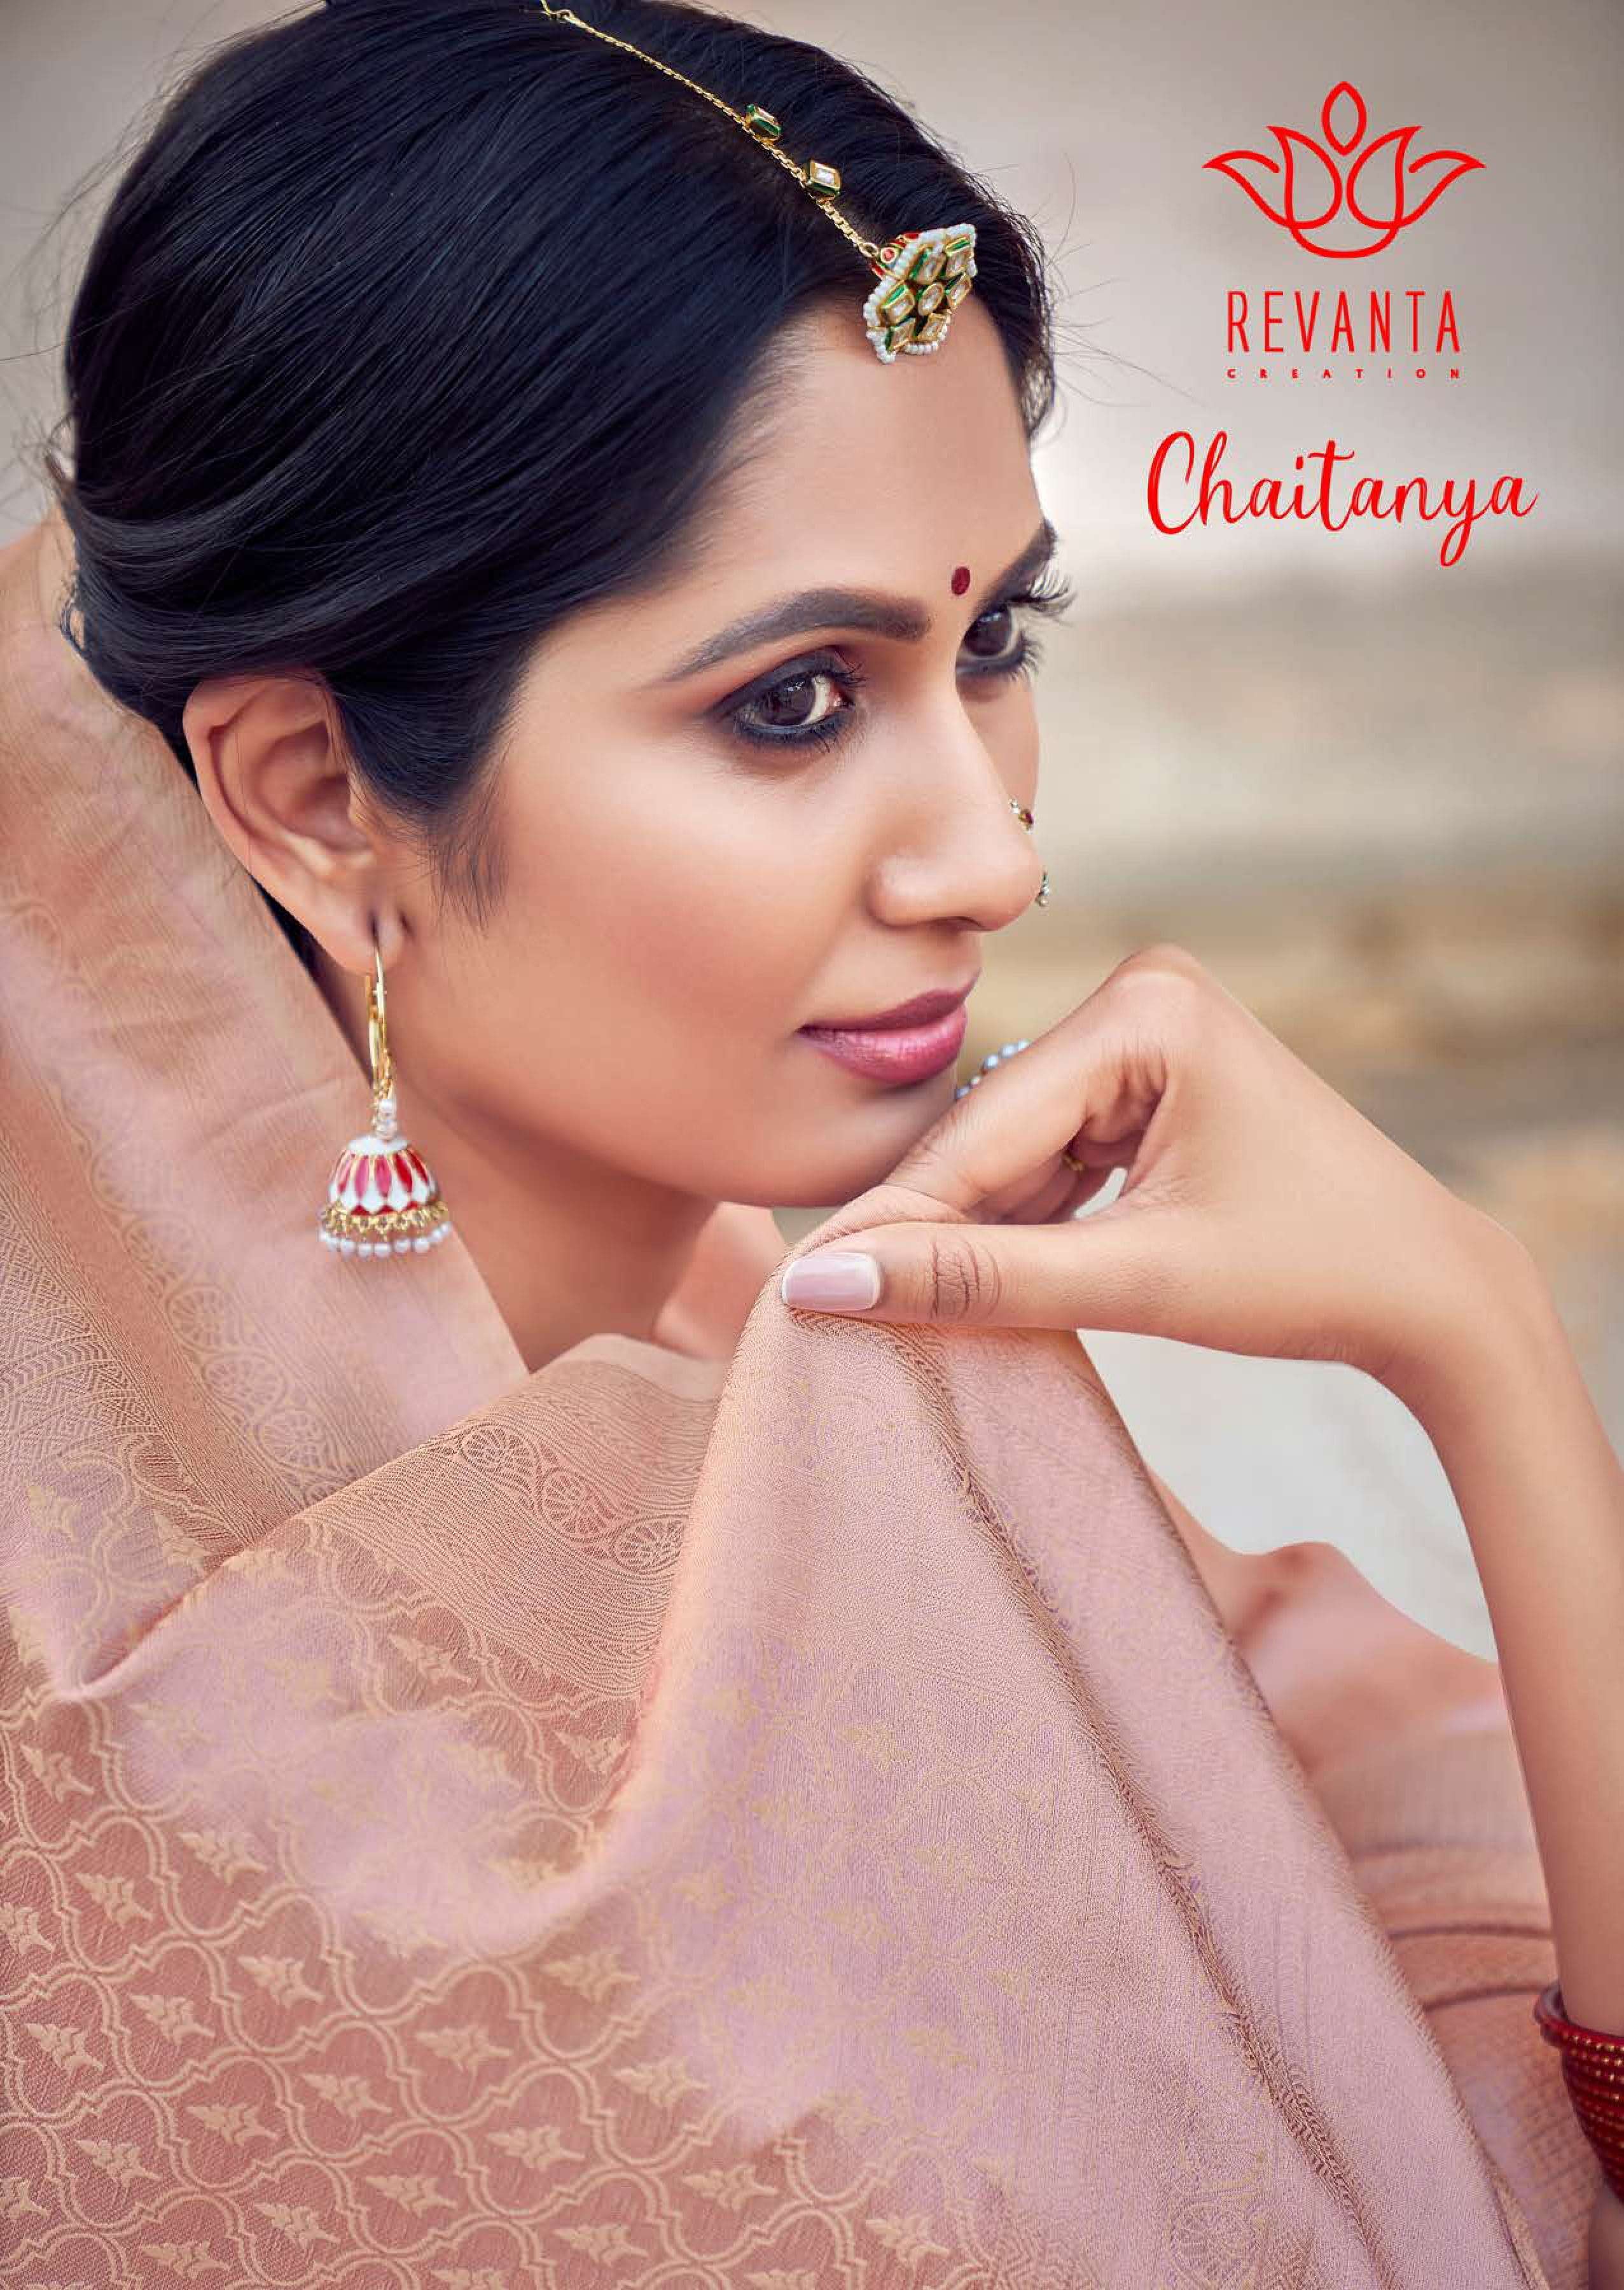 revanta chaitanya silk sarees best quality products 